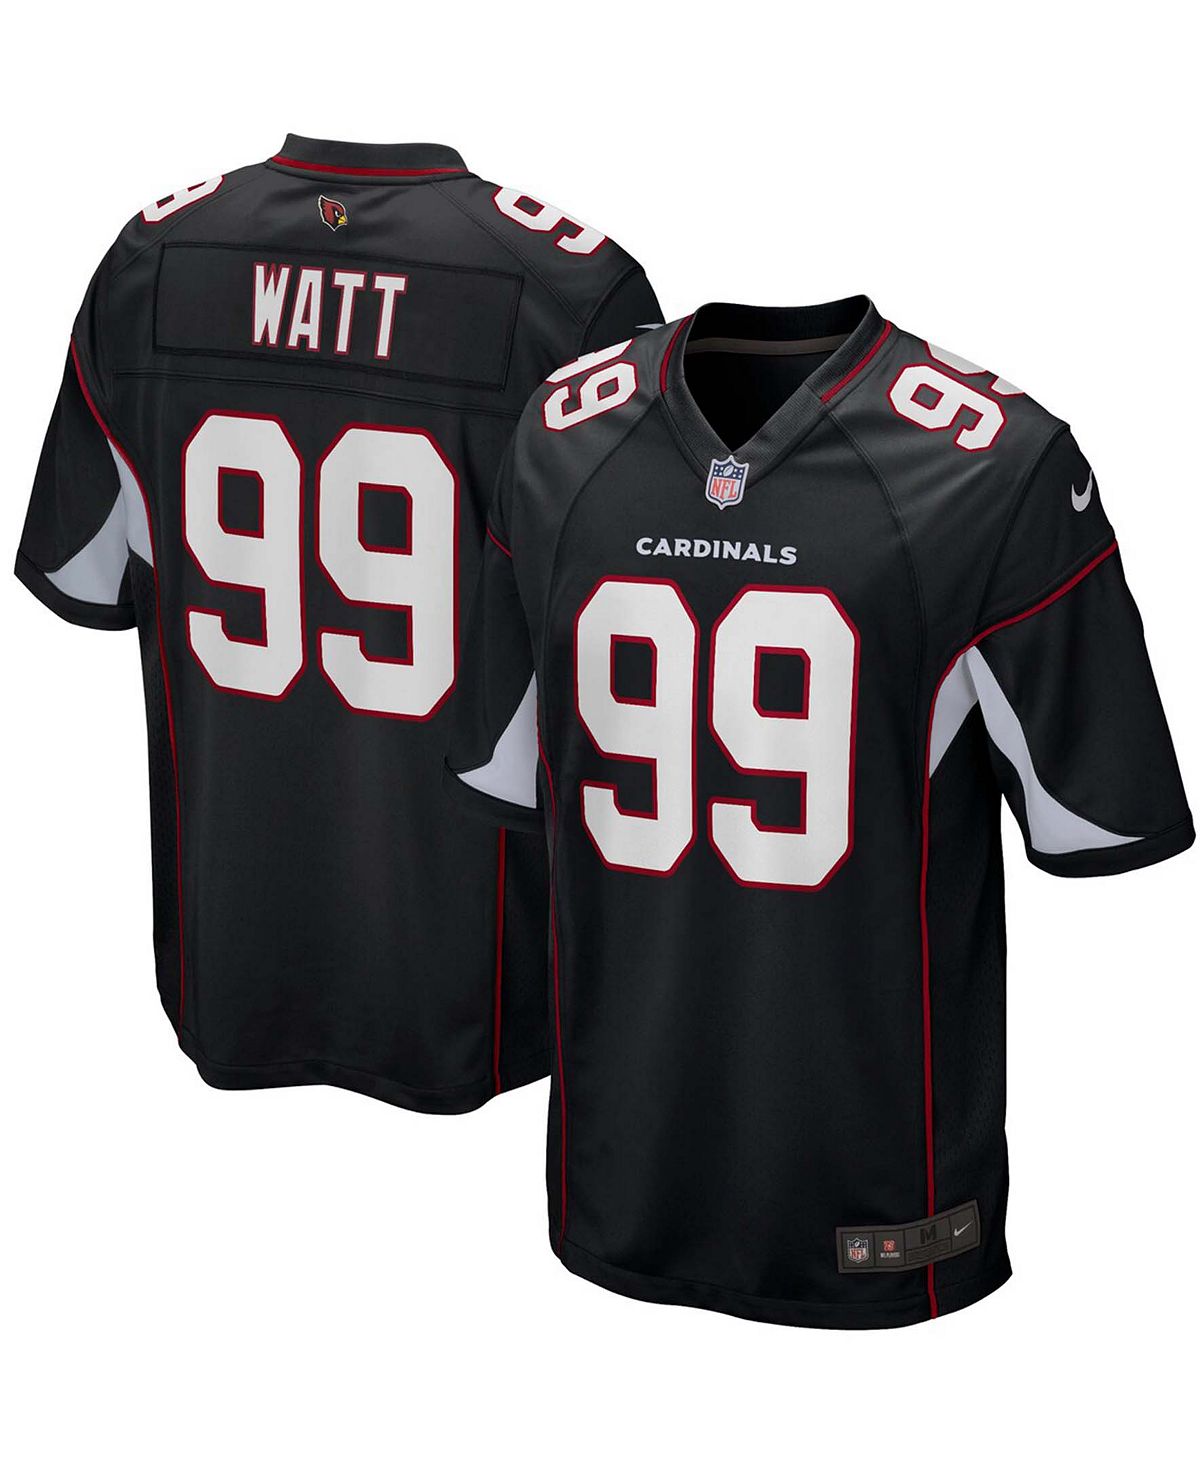 Футболка Nike J.Watt Arizona Cardinals Alternate Game Size 3XL, черный